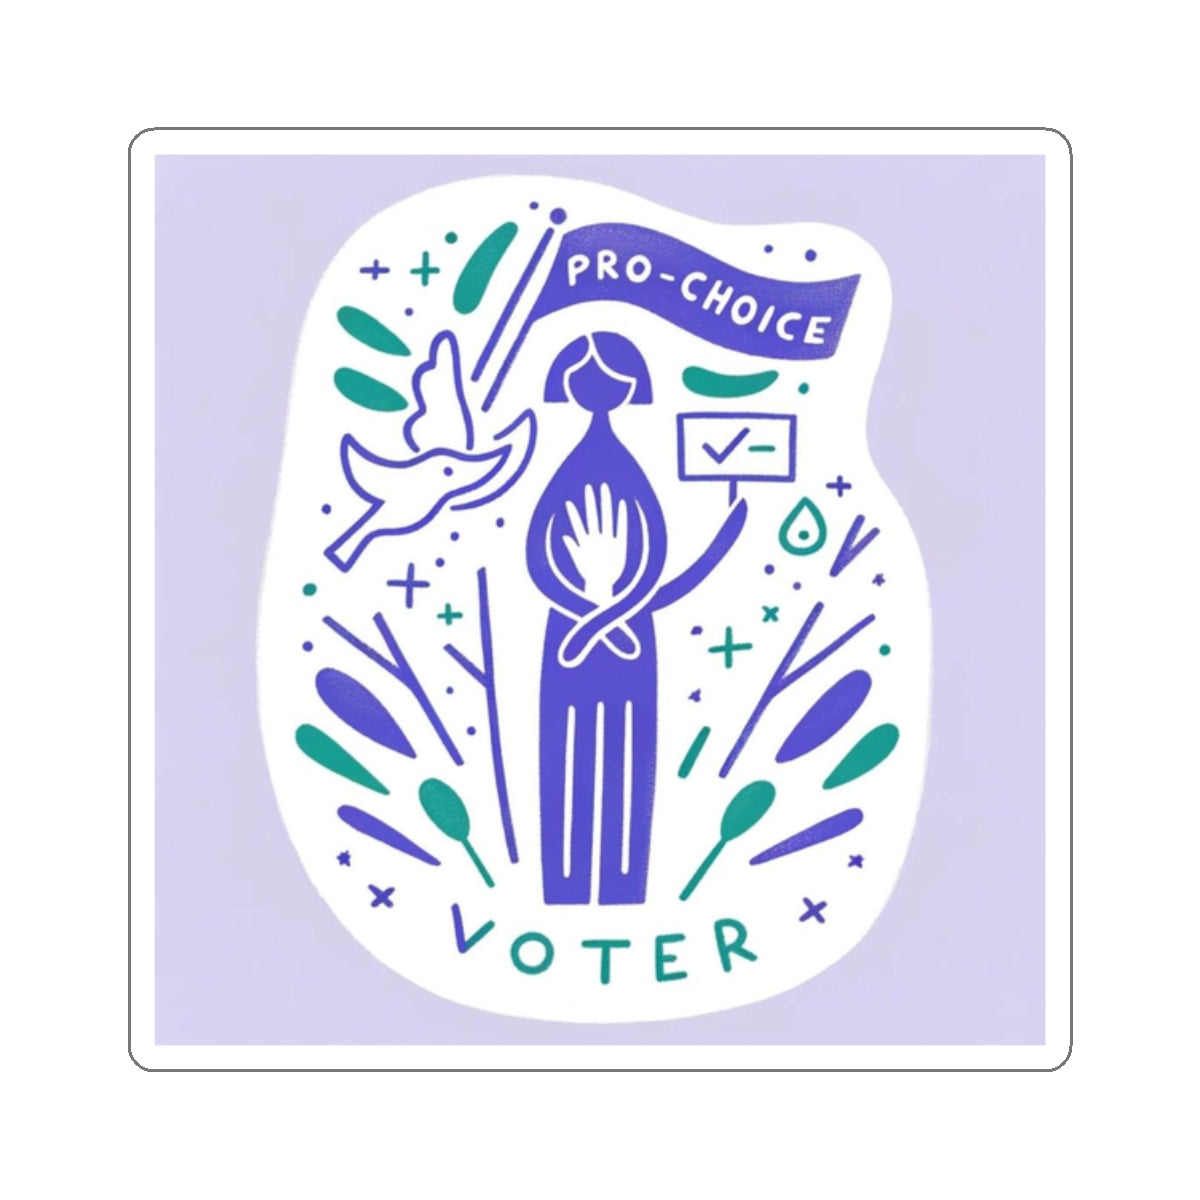 Pro-Choice Voter v3 Stickers